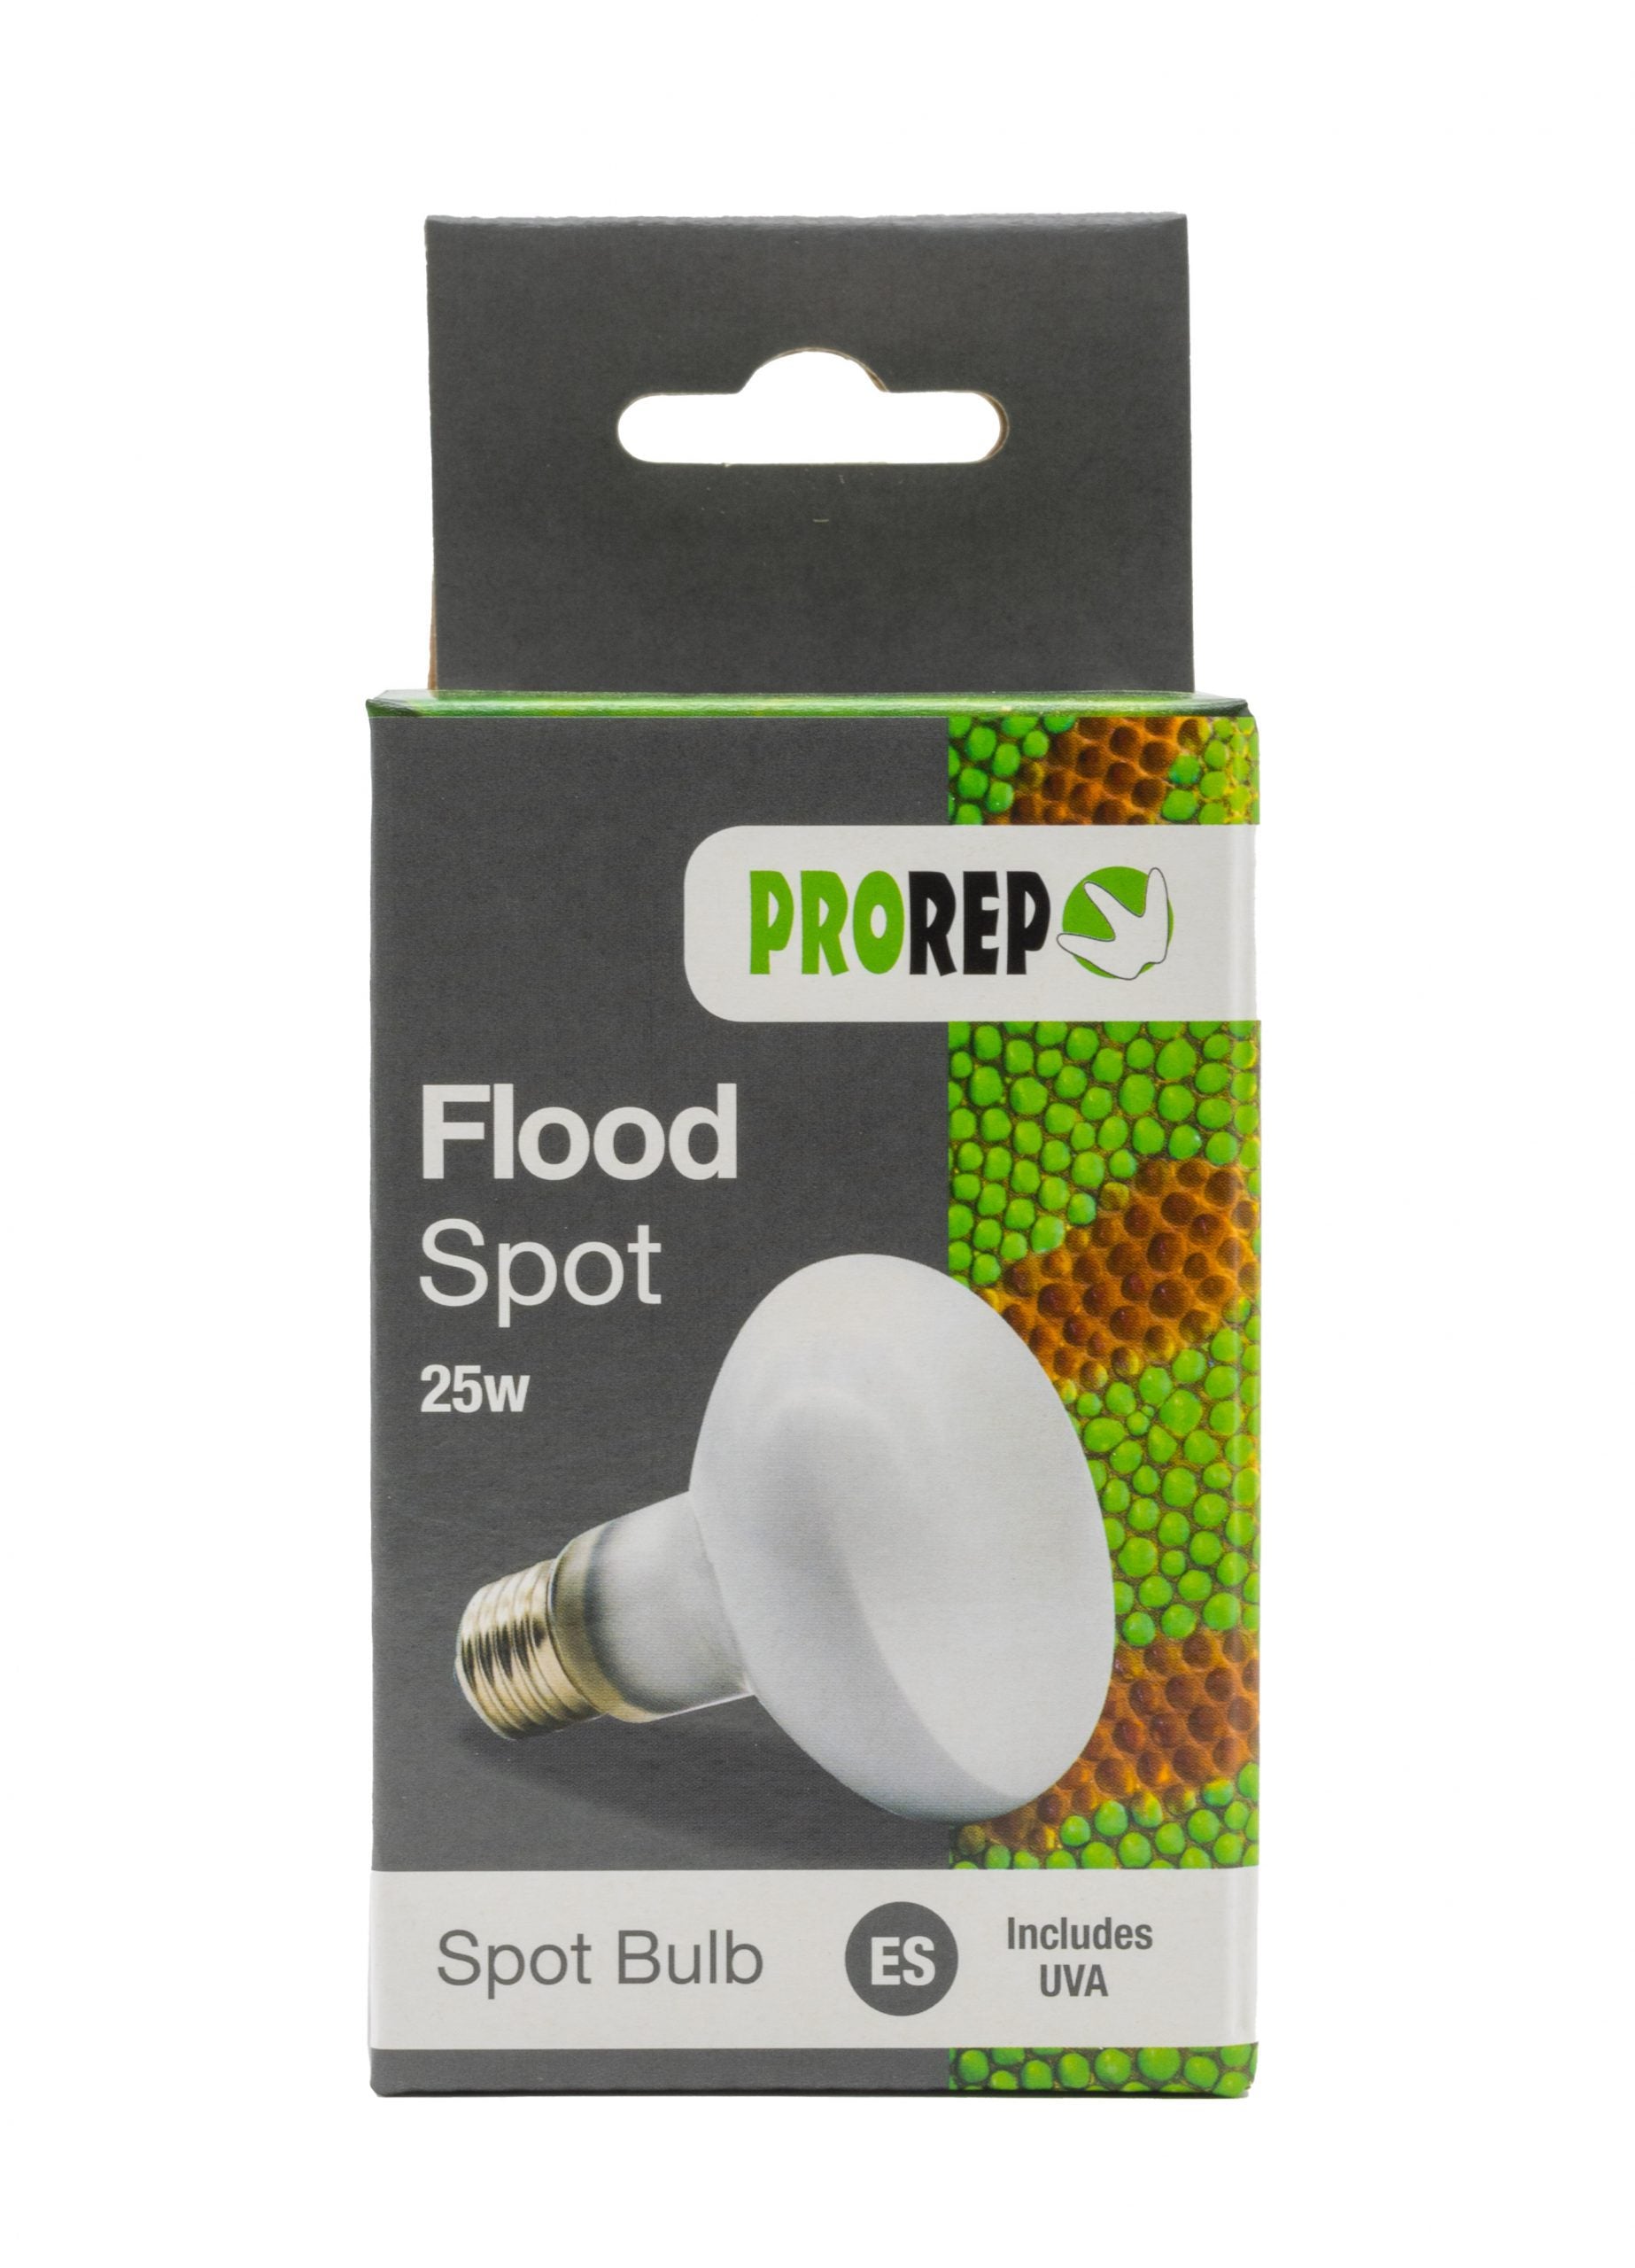 Flood Spot Lamp 25w